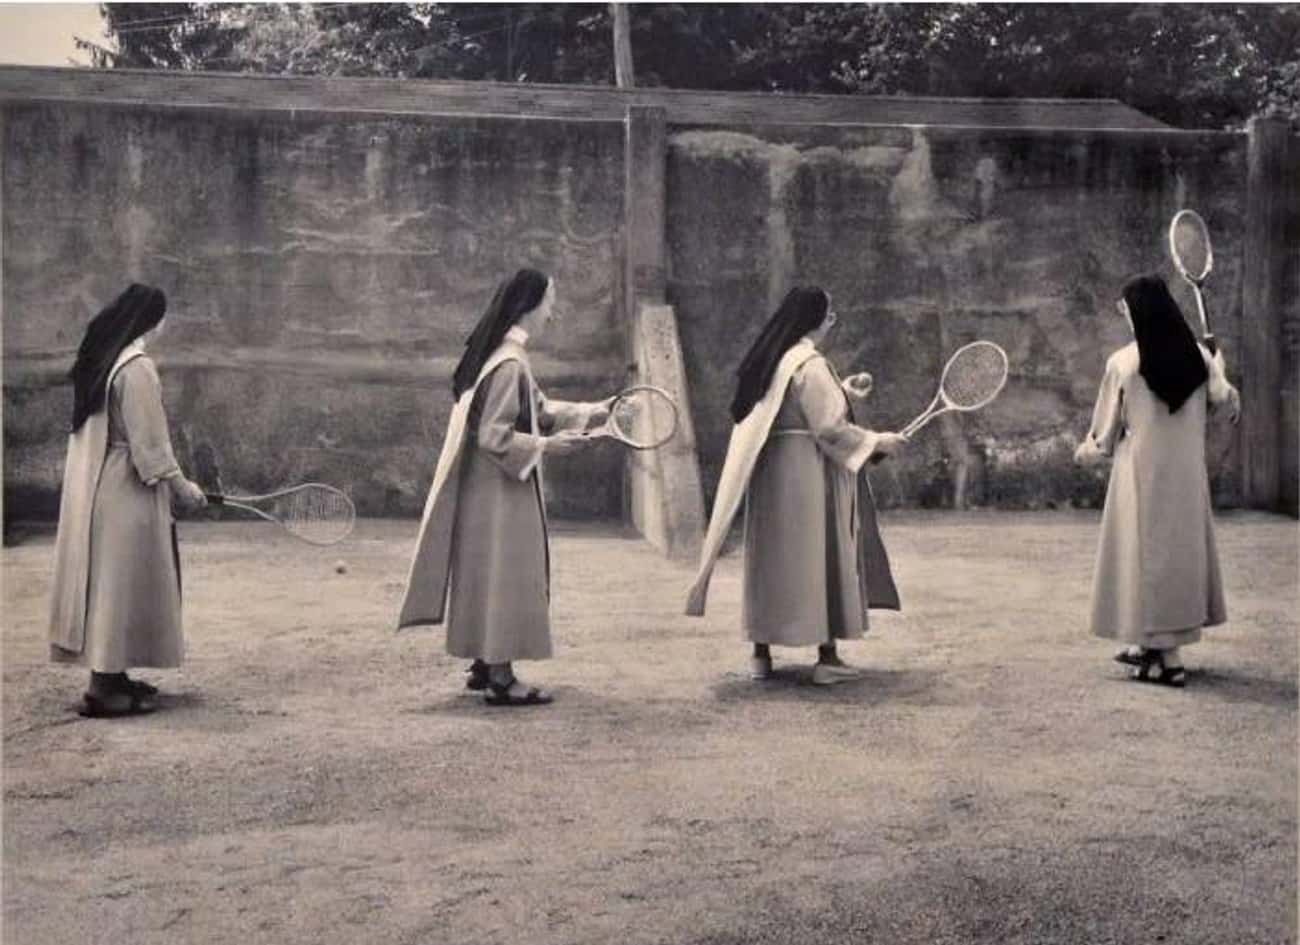 Nuns Practicing Their Tennis Skills